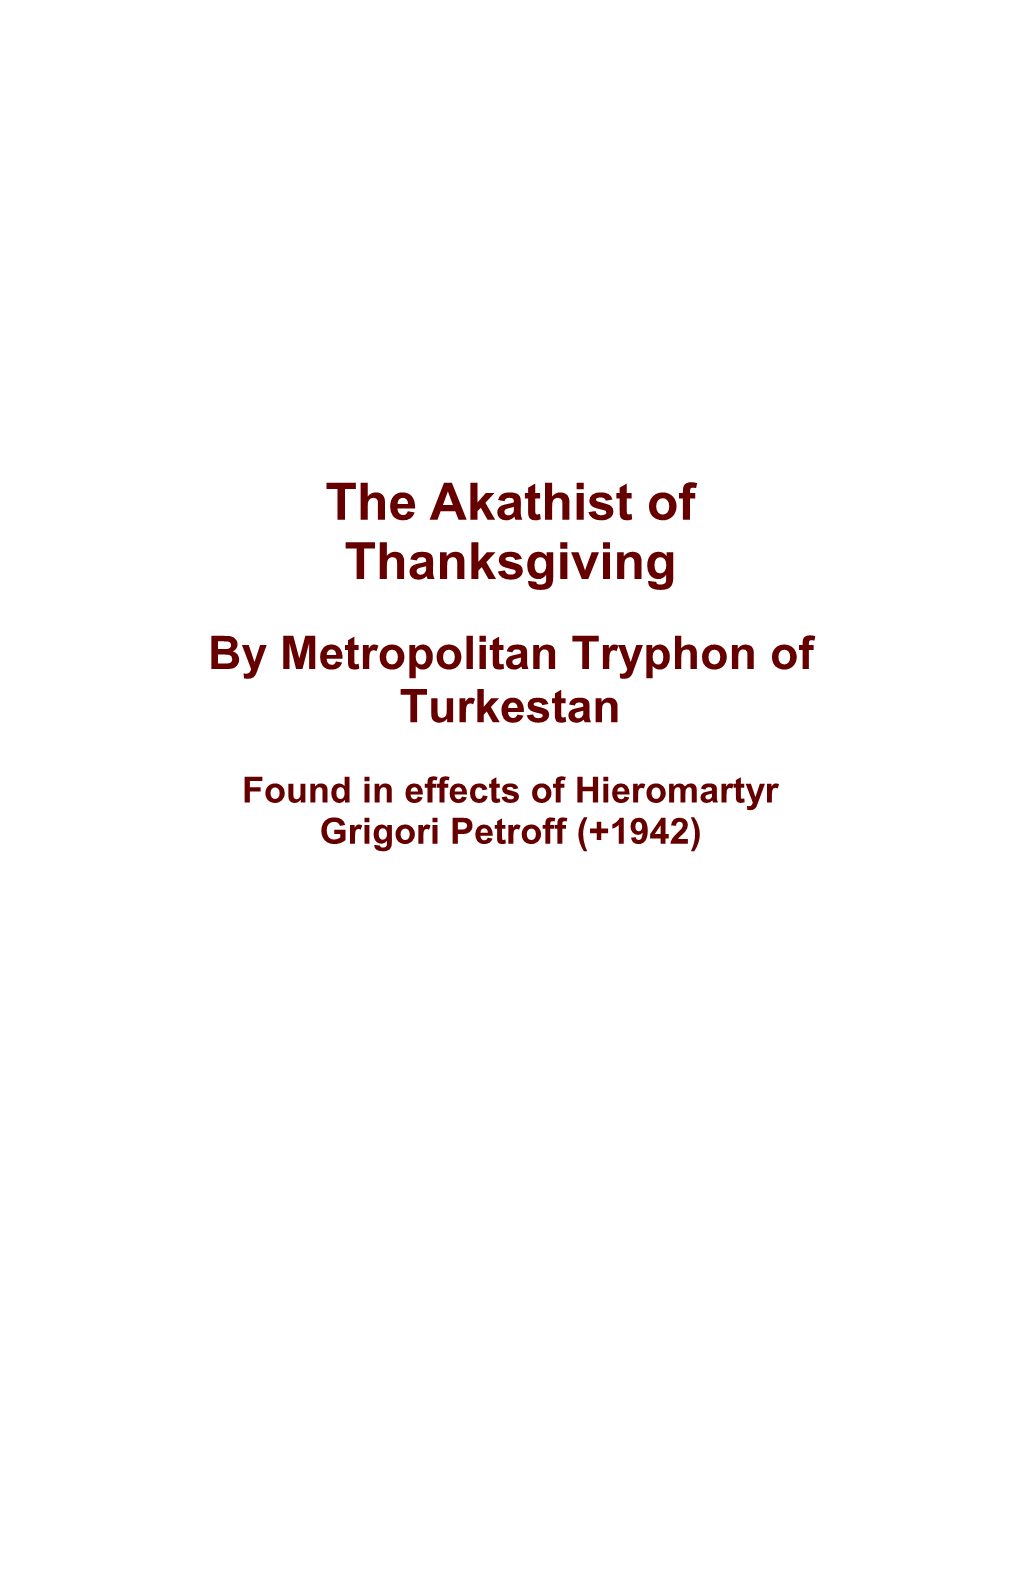 The Akathist of Thanksgiving by Metropolitan Tryphon of Turkestan